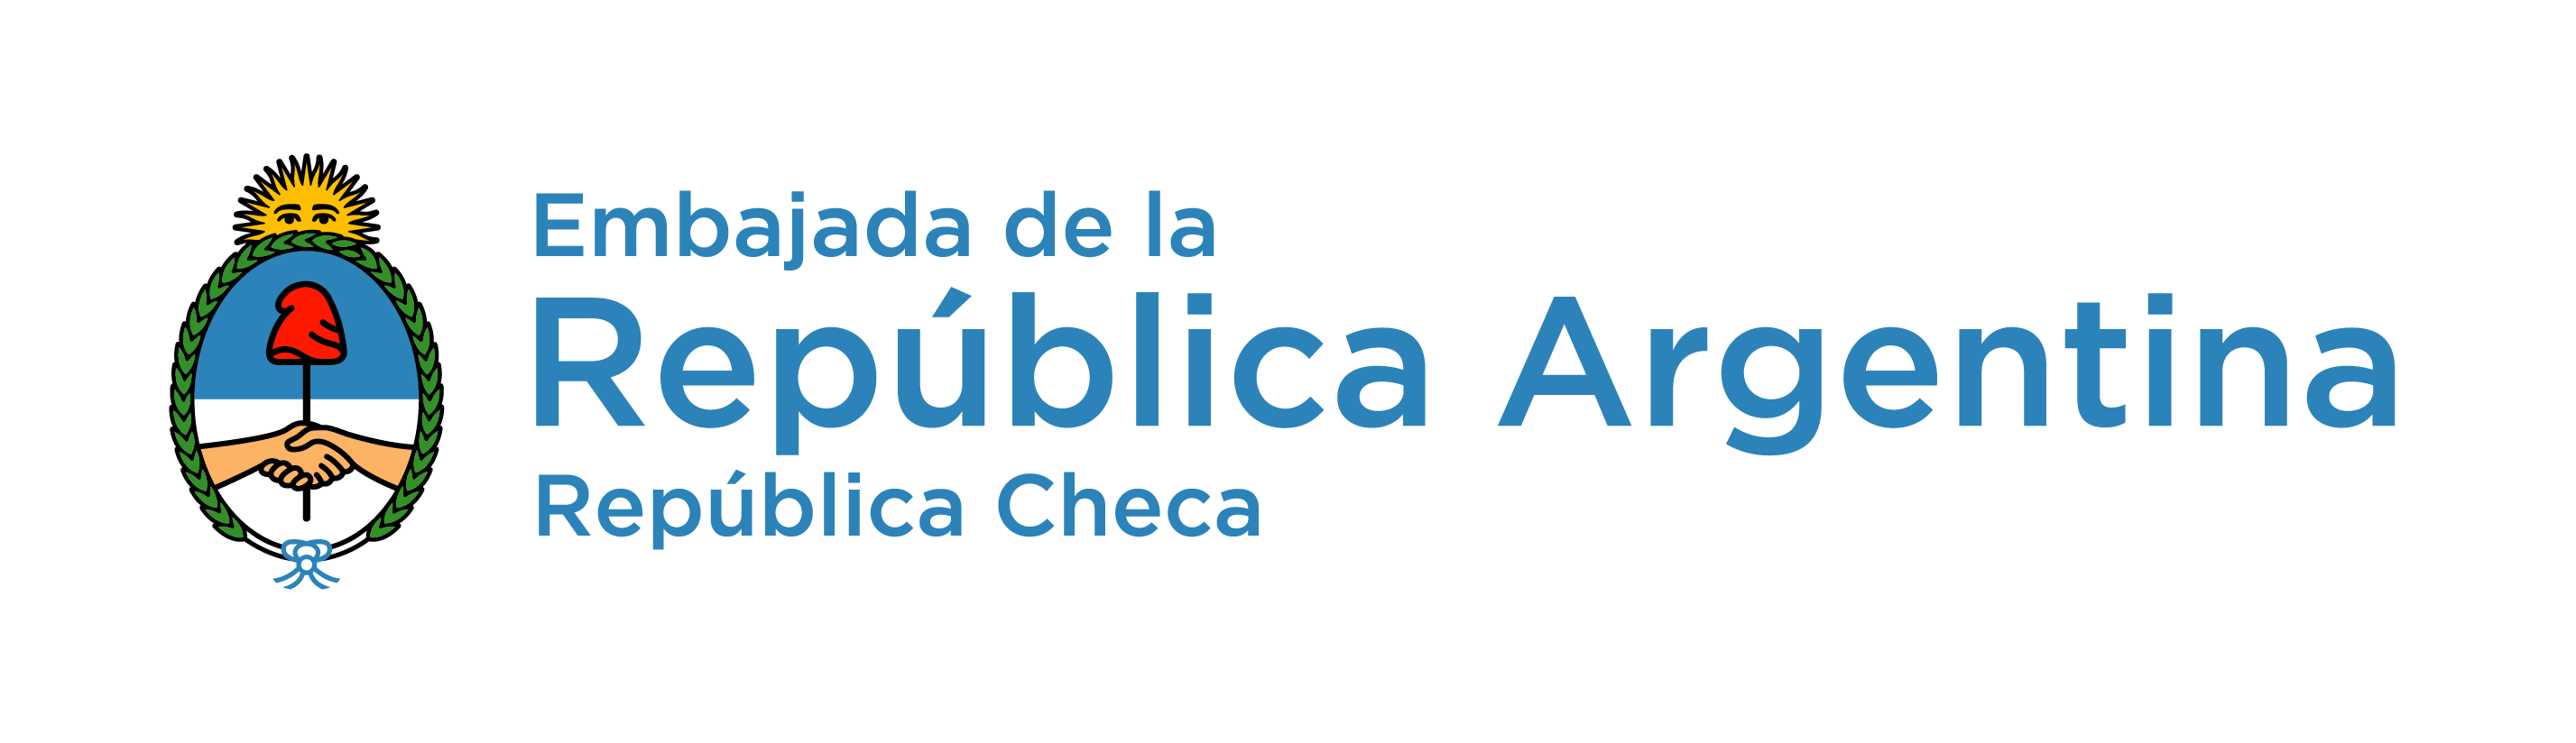 Embajada de Argentina (República Checa)